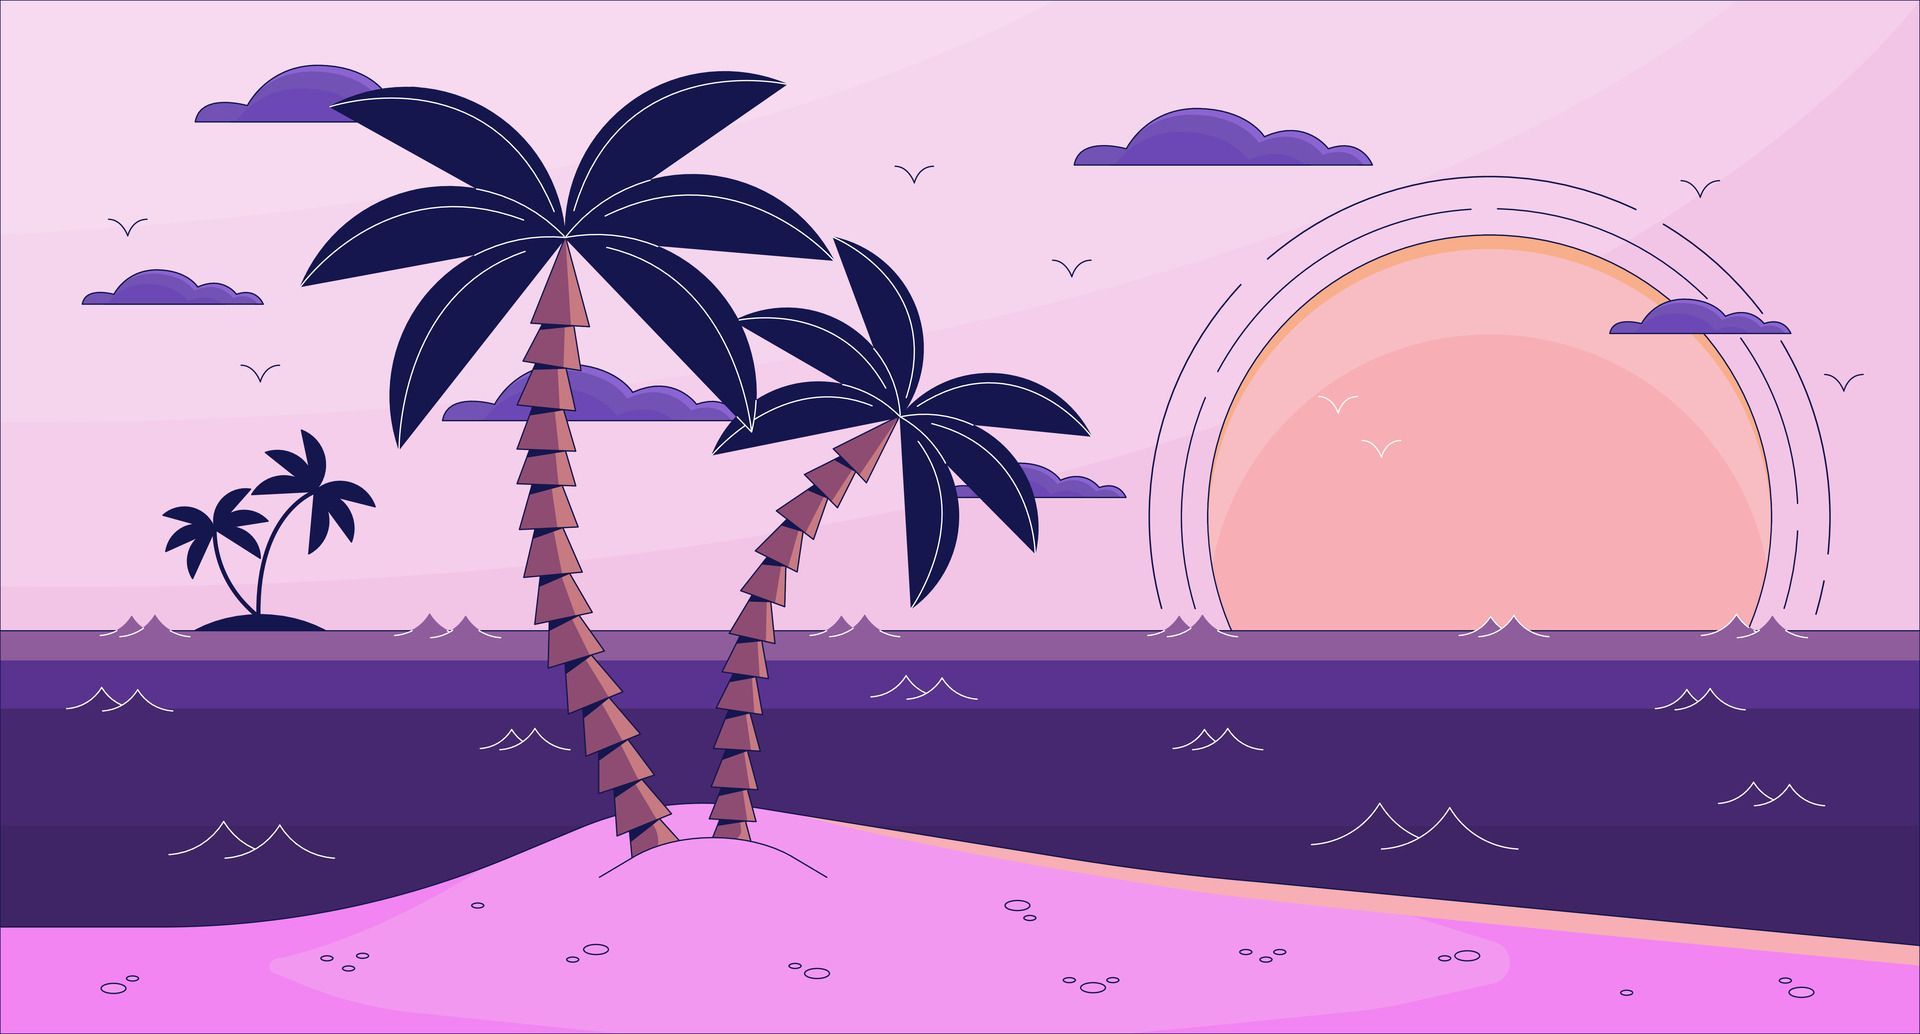 Bay lo fi aesthetic wallpaper. Sunset near ocean. Small island. Beach with palm tree and sand 2D vector cartoon landscape illustration, purple lofi background. 90s retro album art, chill vibes Vector